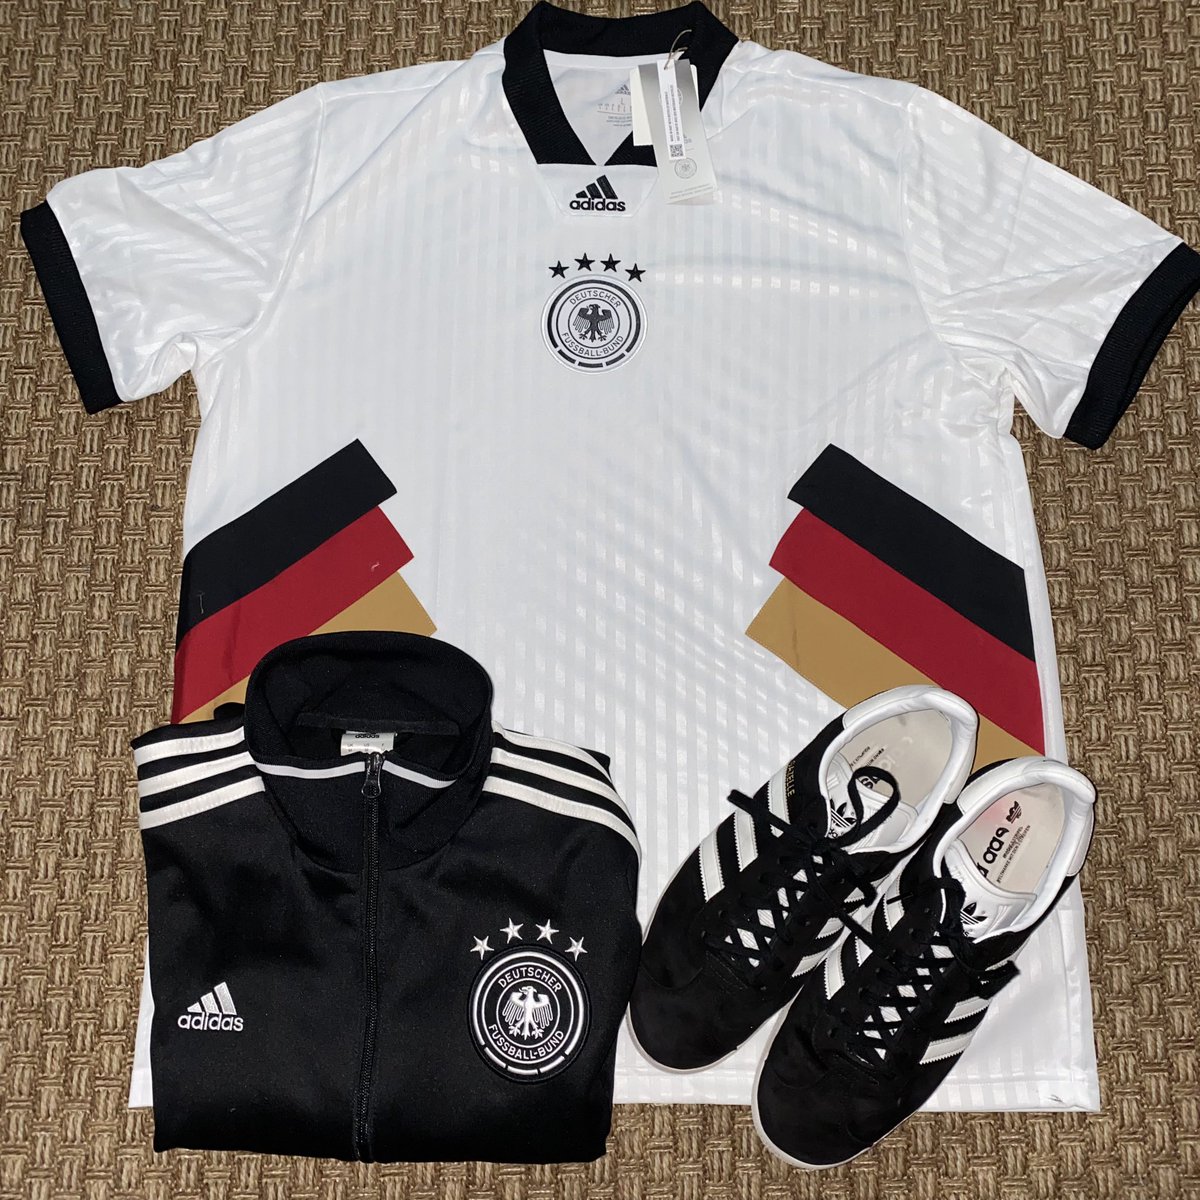 ⚫️🔴🟡 #Deutschland jersey icon by @adidasfootball @adidas @adidasoriginals #adidas #adidasoriginals #adidasgazelle #YESadidas #Tegucigalpa #Honduras